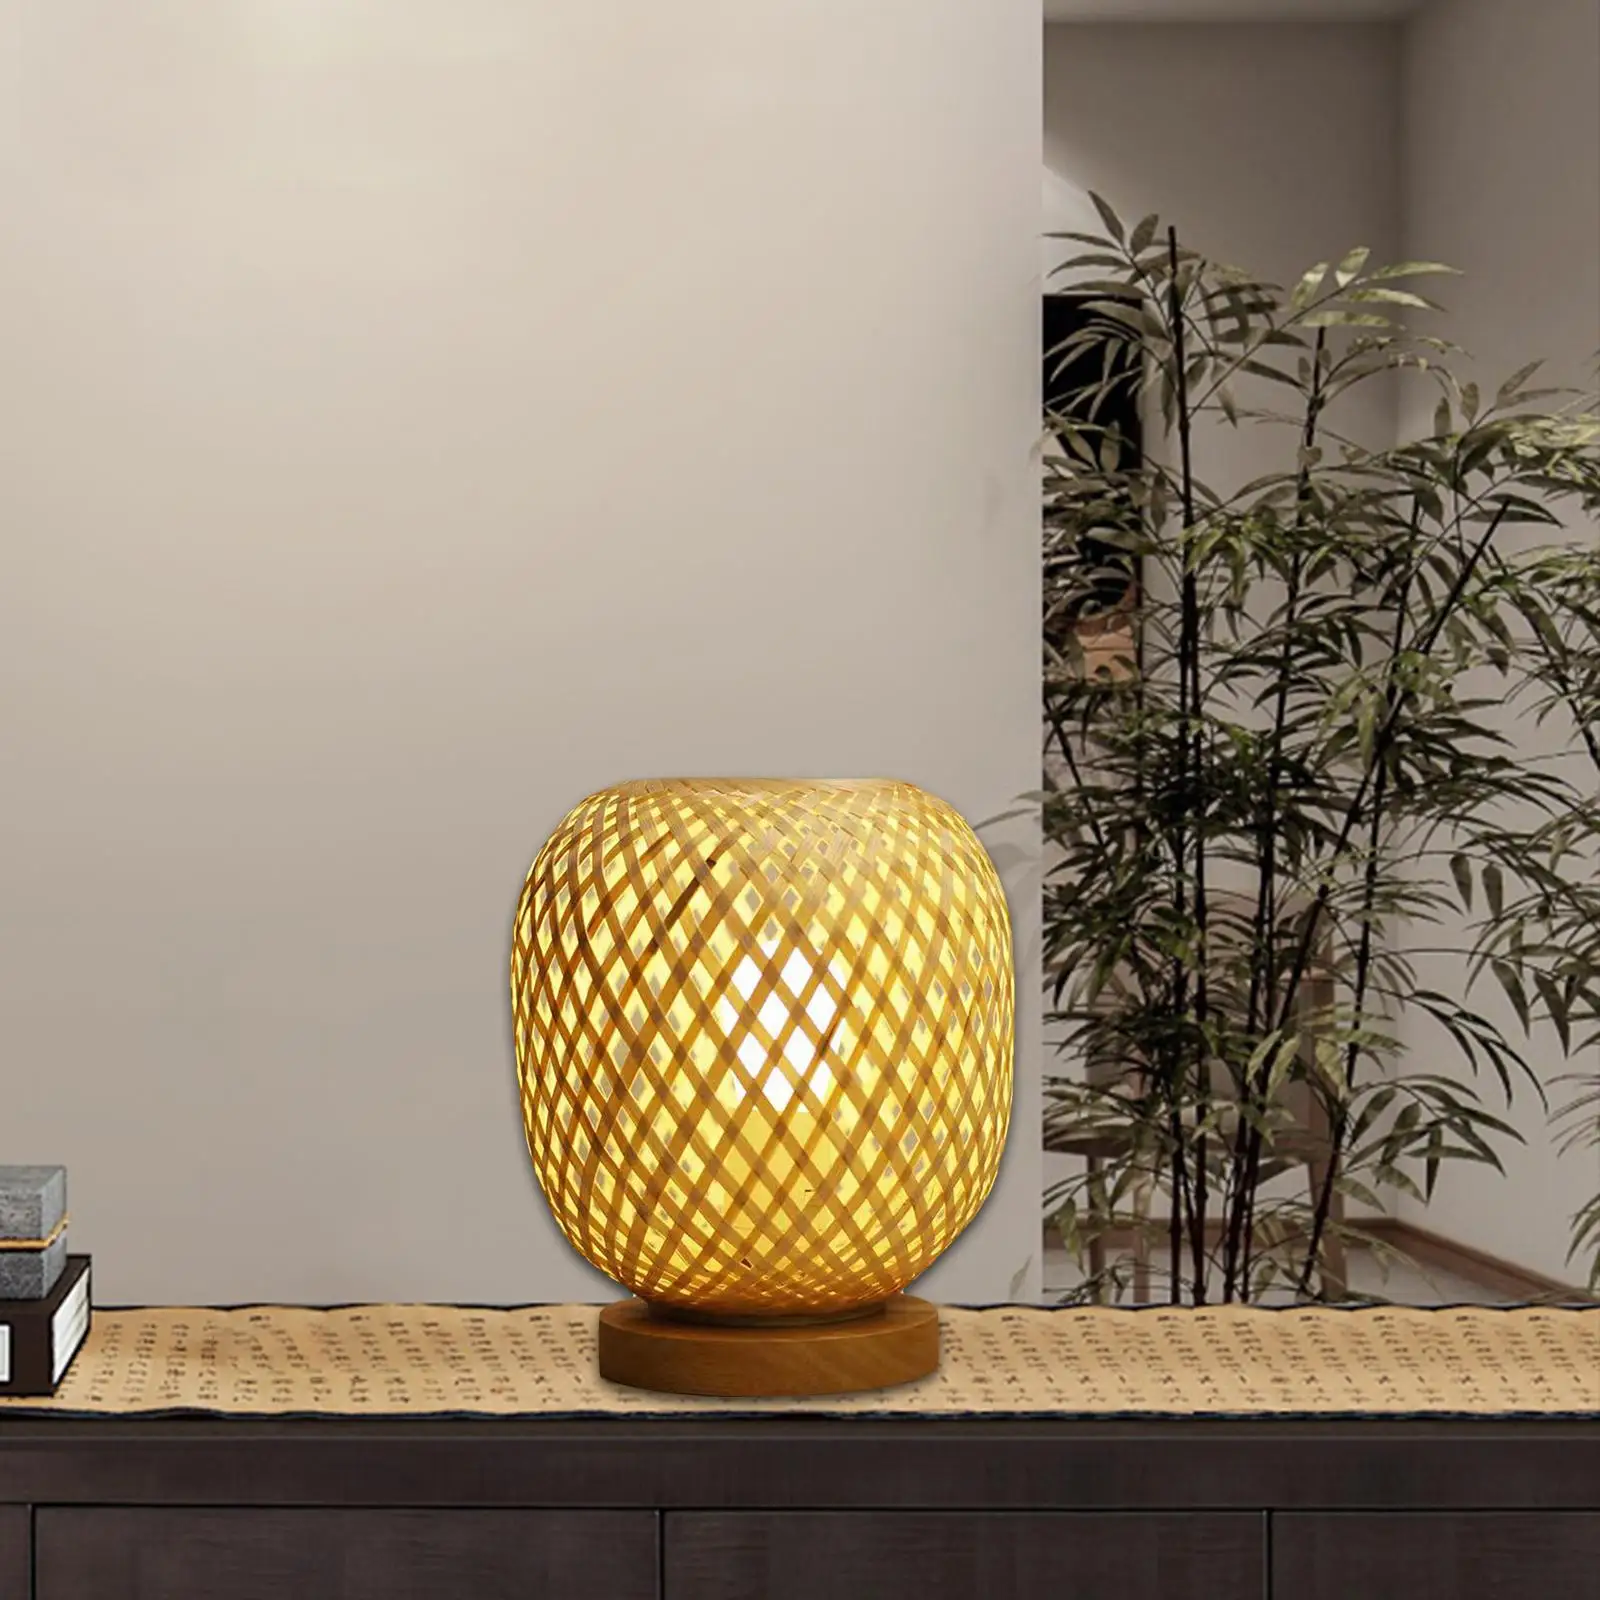  Weaving Lampshade Bedroom Desk Light Study Desk Lamp Bedside Table Lamp  Living Room Decoration Bamboo Lamp Shade